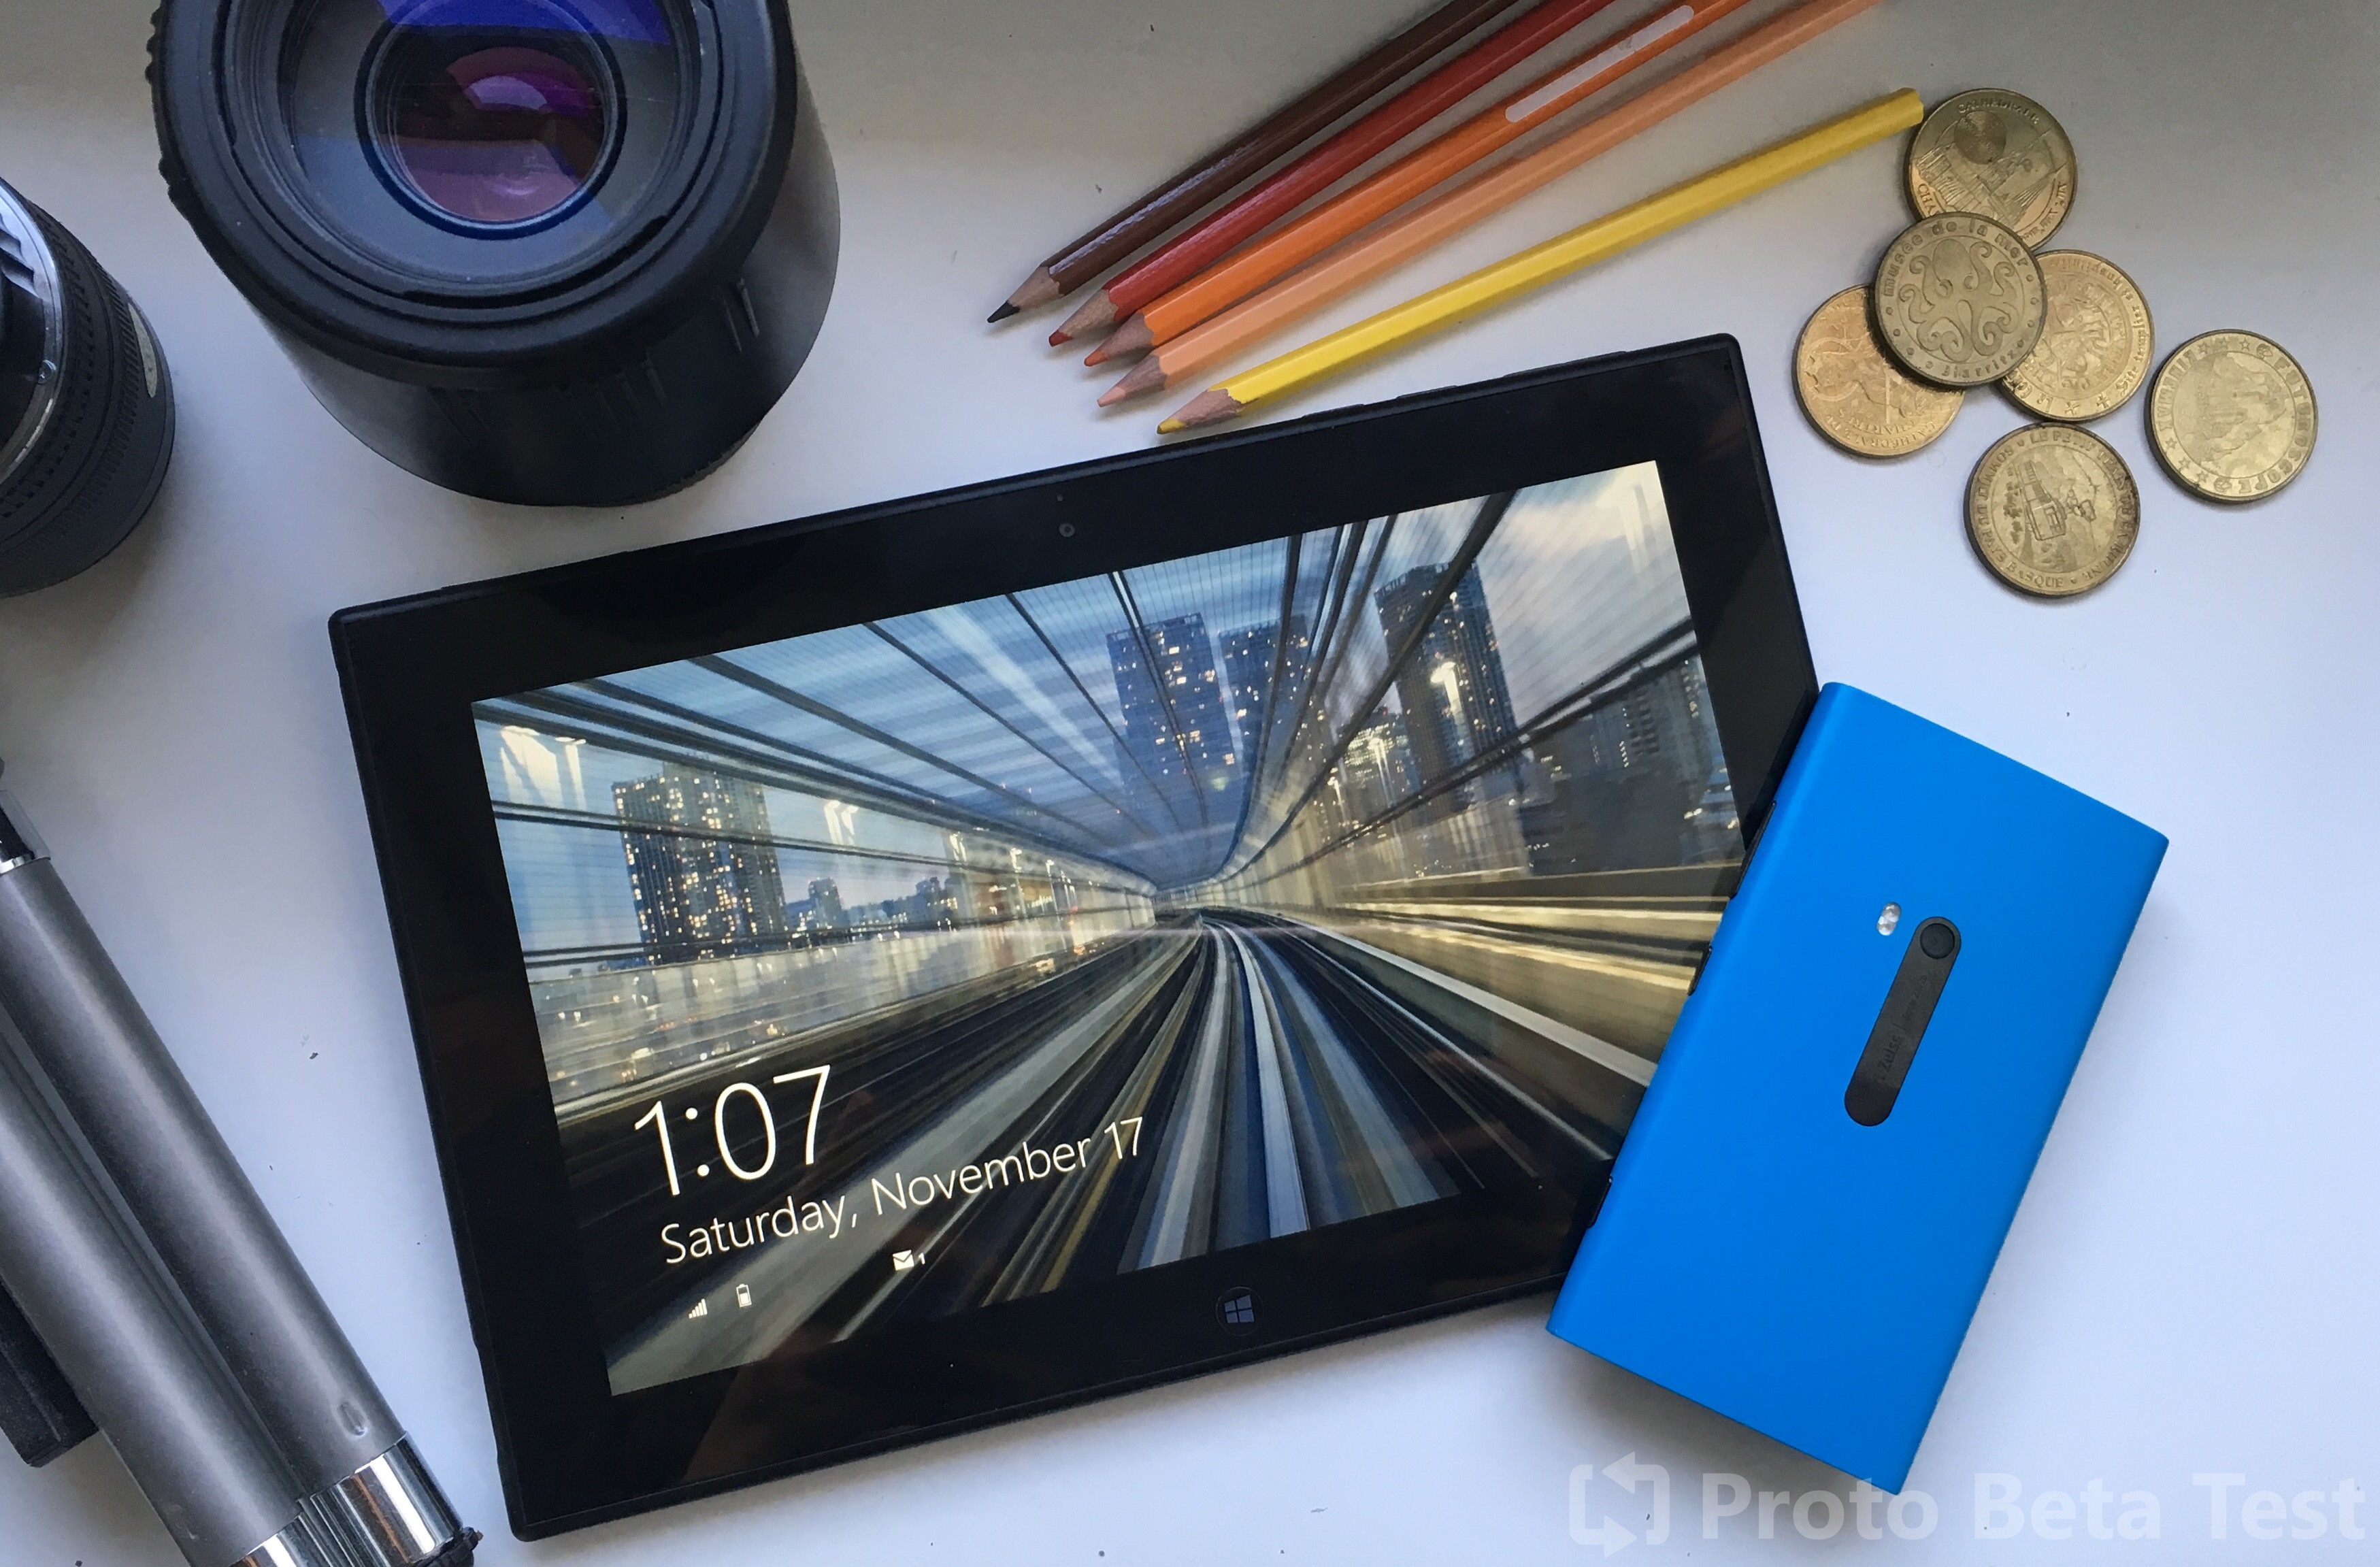 Prototype of Nokia’s tablet codenamed Vega leaks online